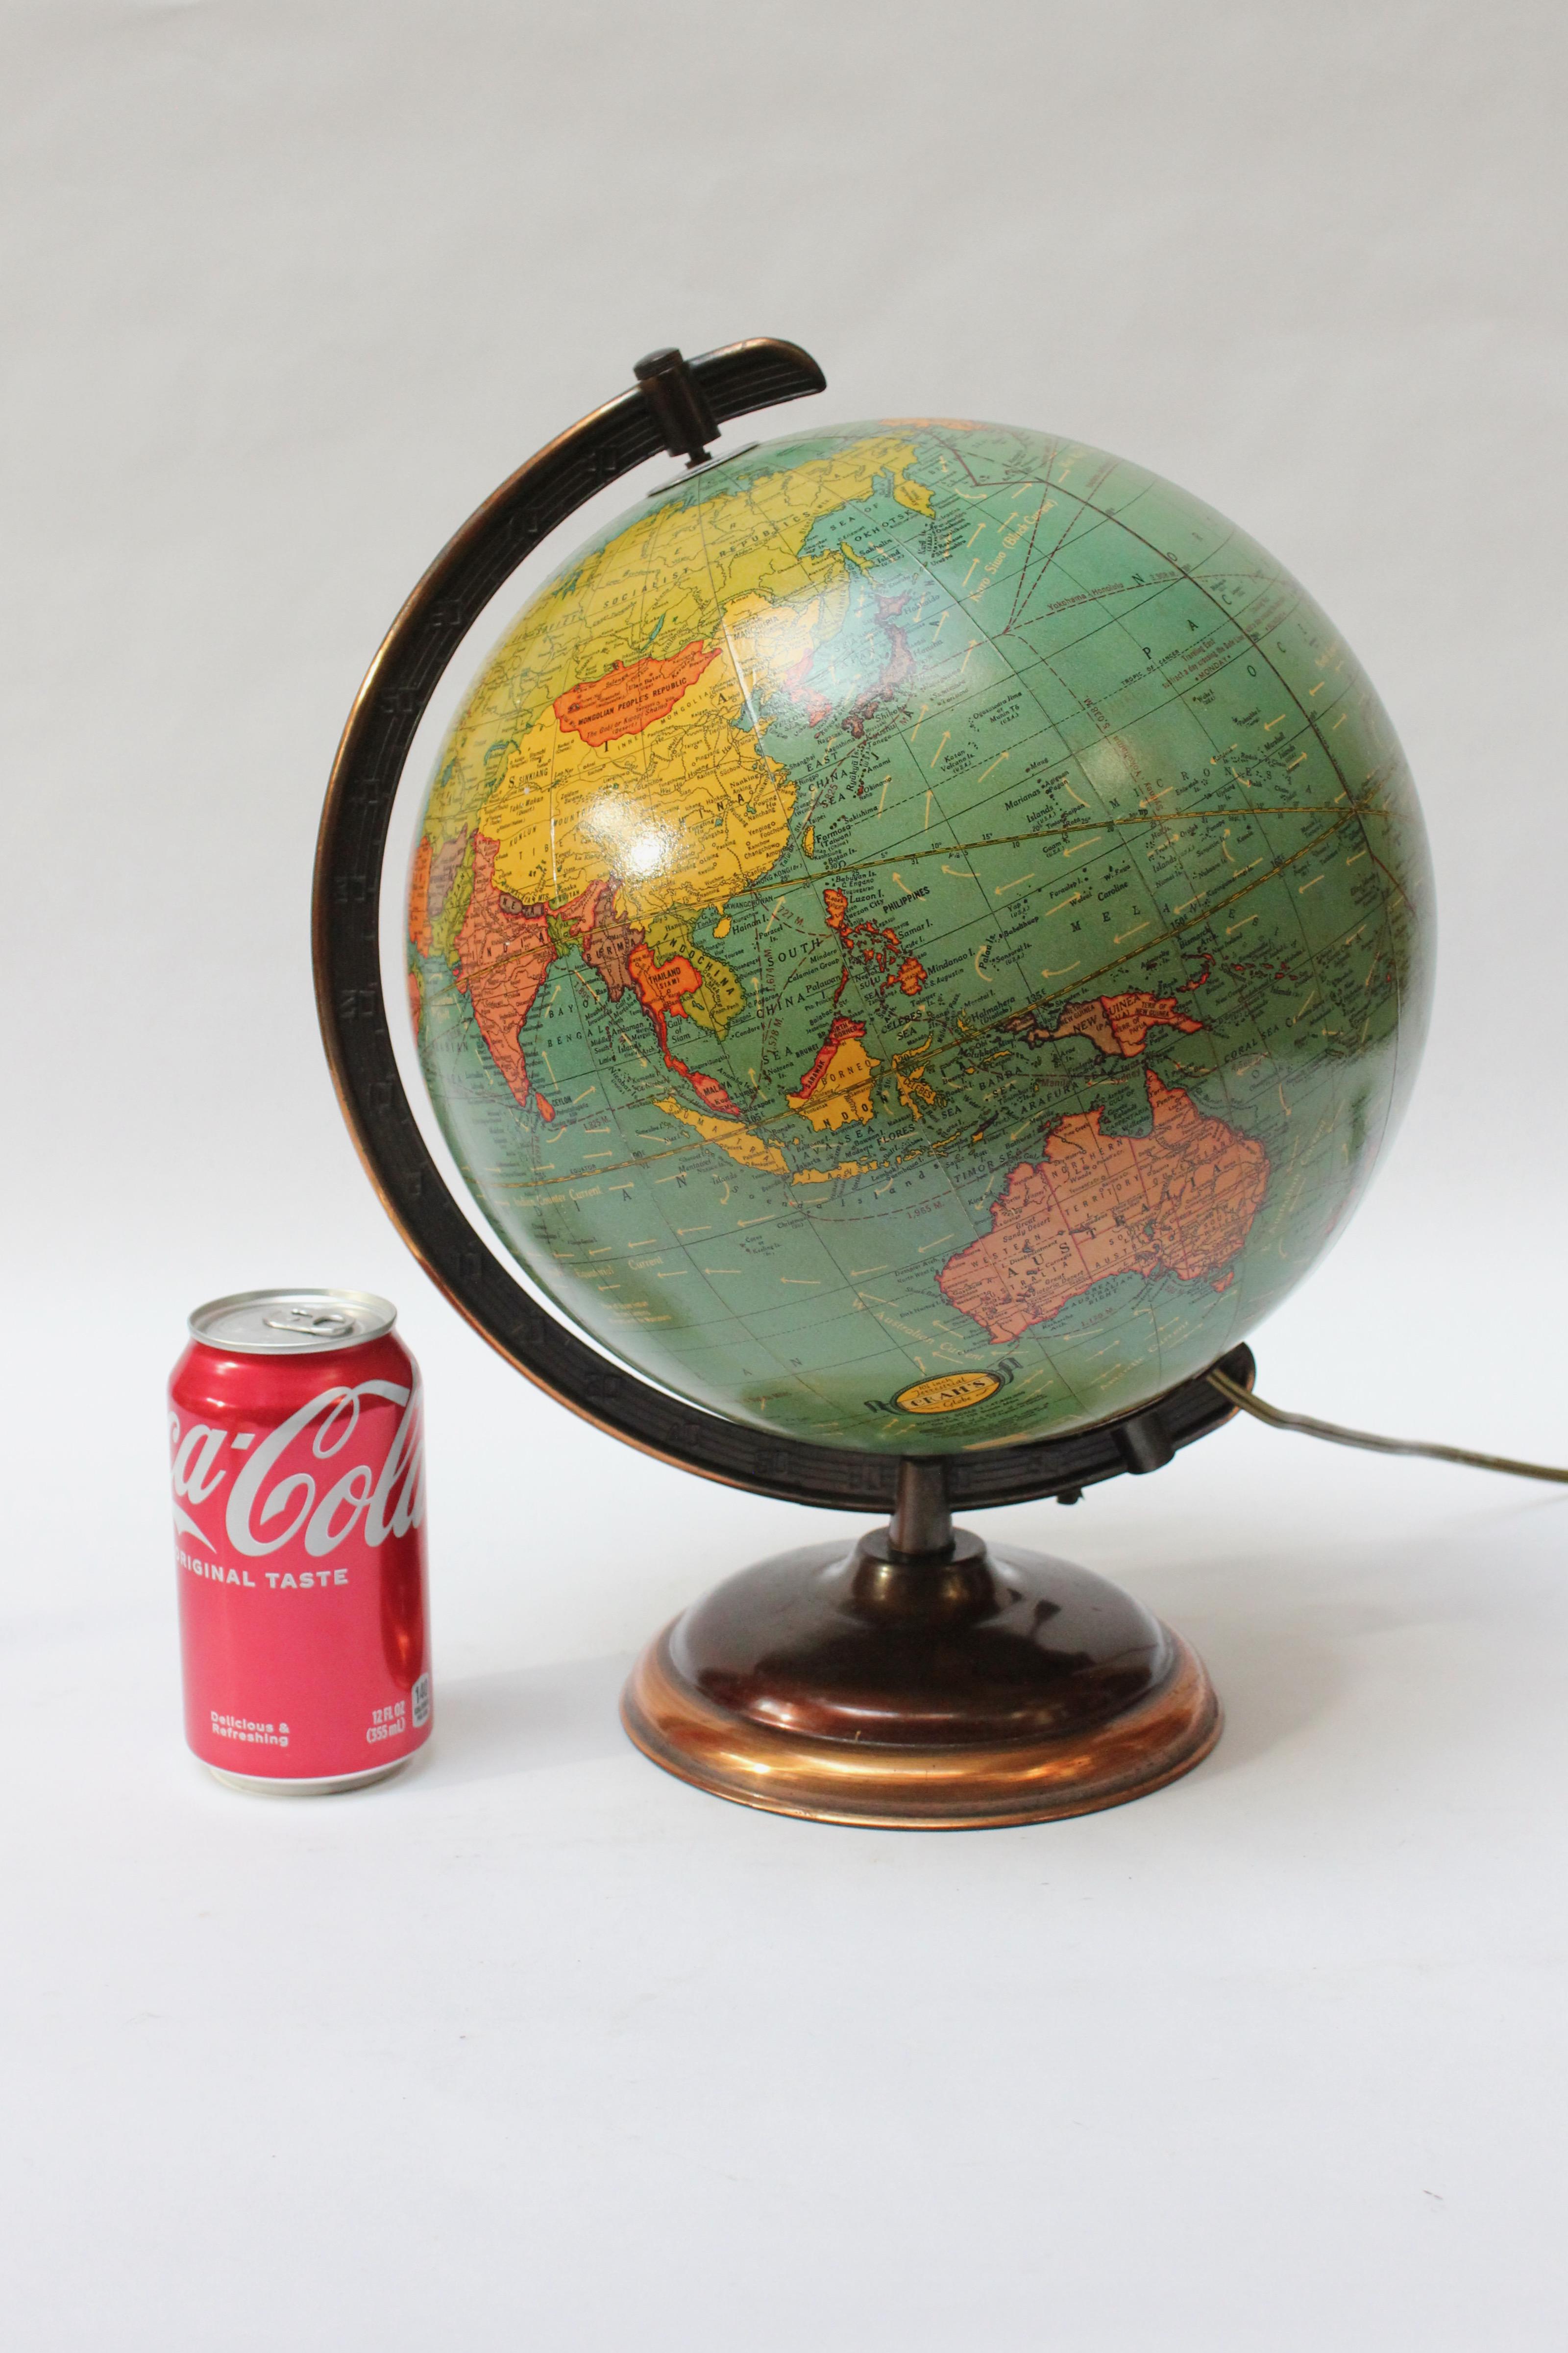 vintage illuminated globe